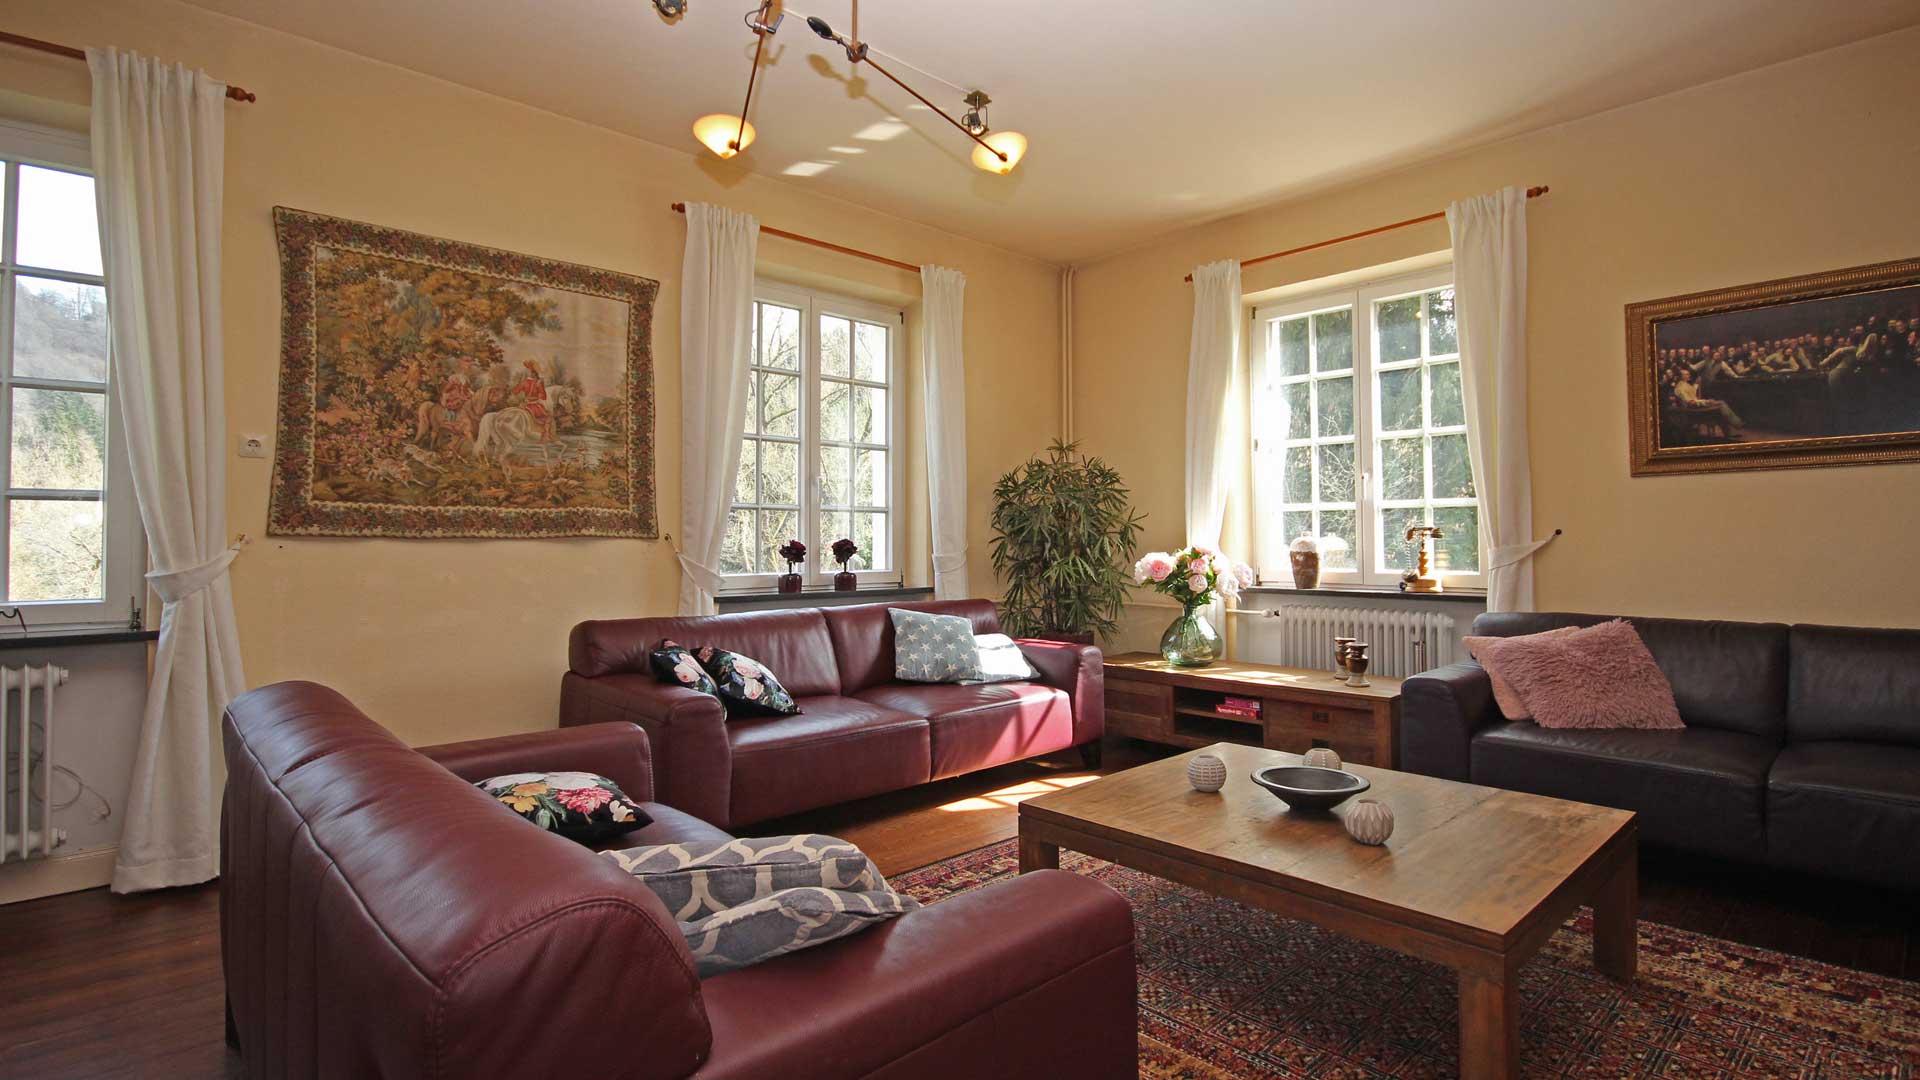 spacious living room with comfortable sofas